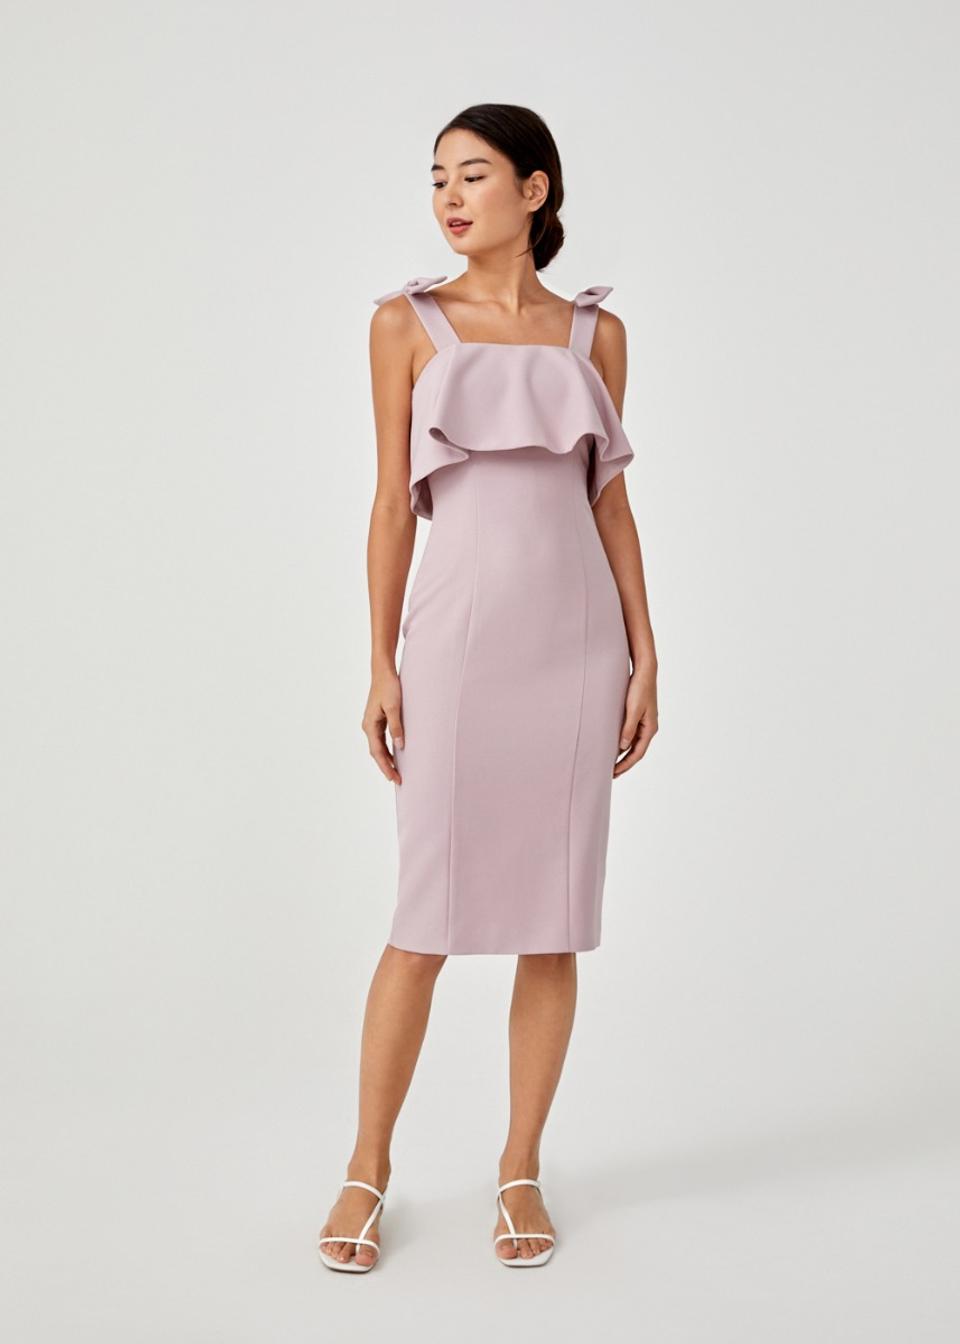 Buy Alliea Bow Detail Overlay Midi Dress @ Love, Bonito | Shop Women's ...